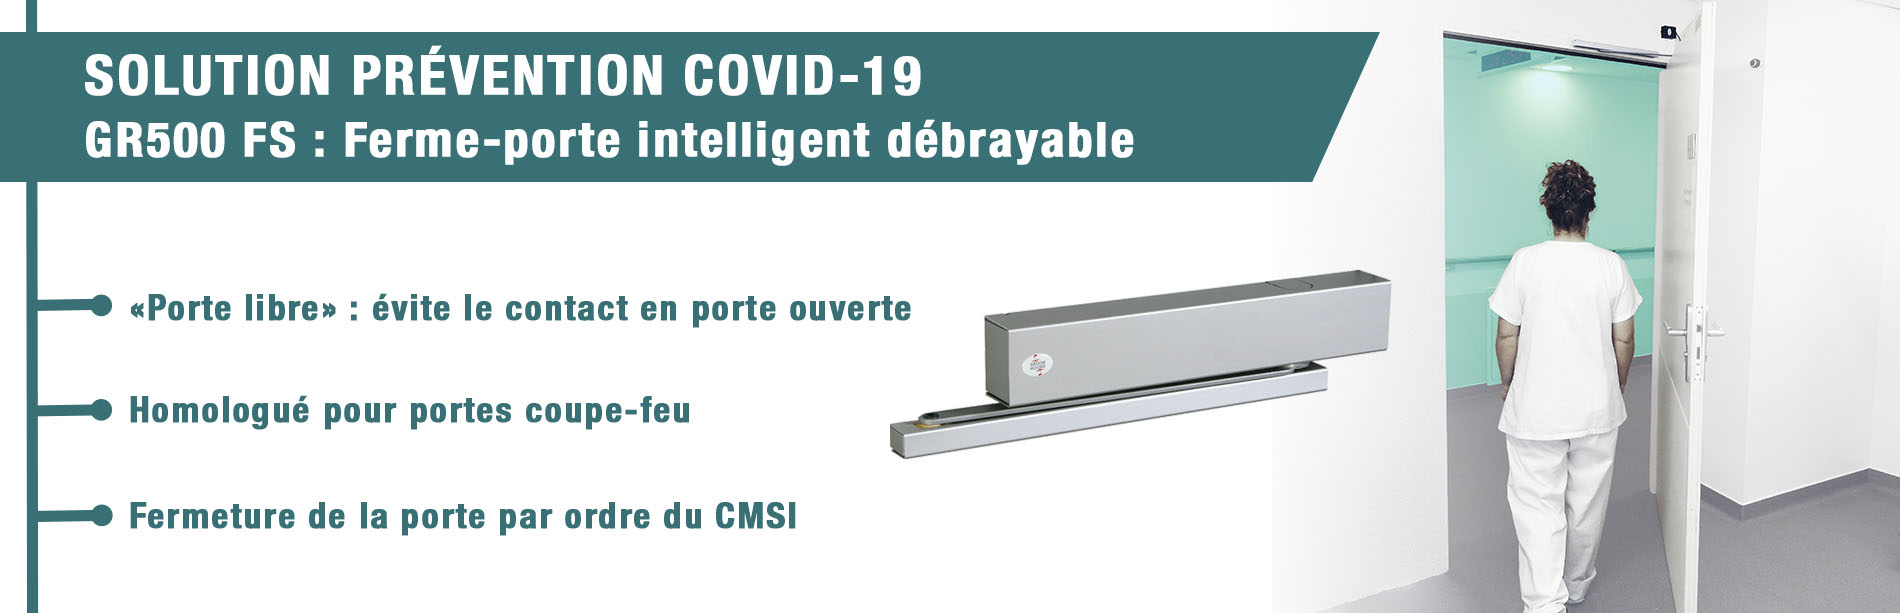 Prévention covid-19 GR500 FS